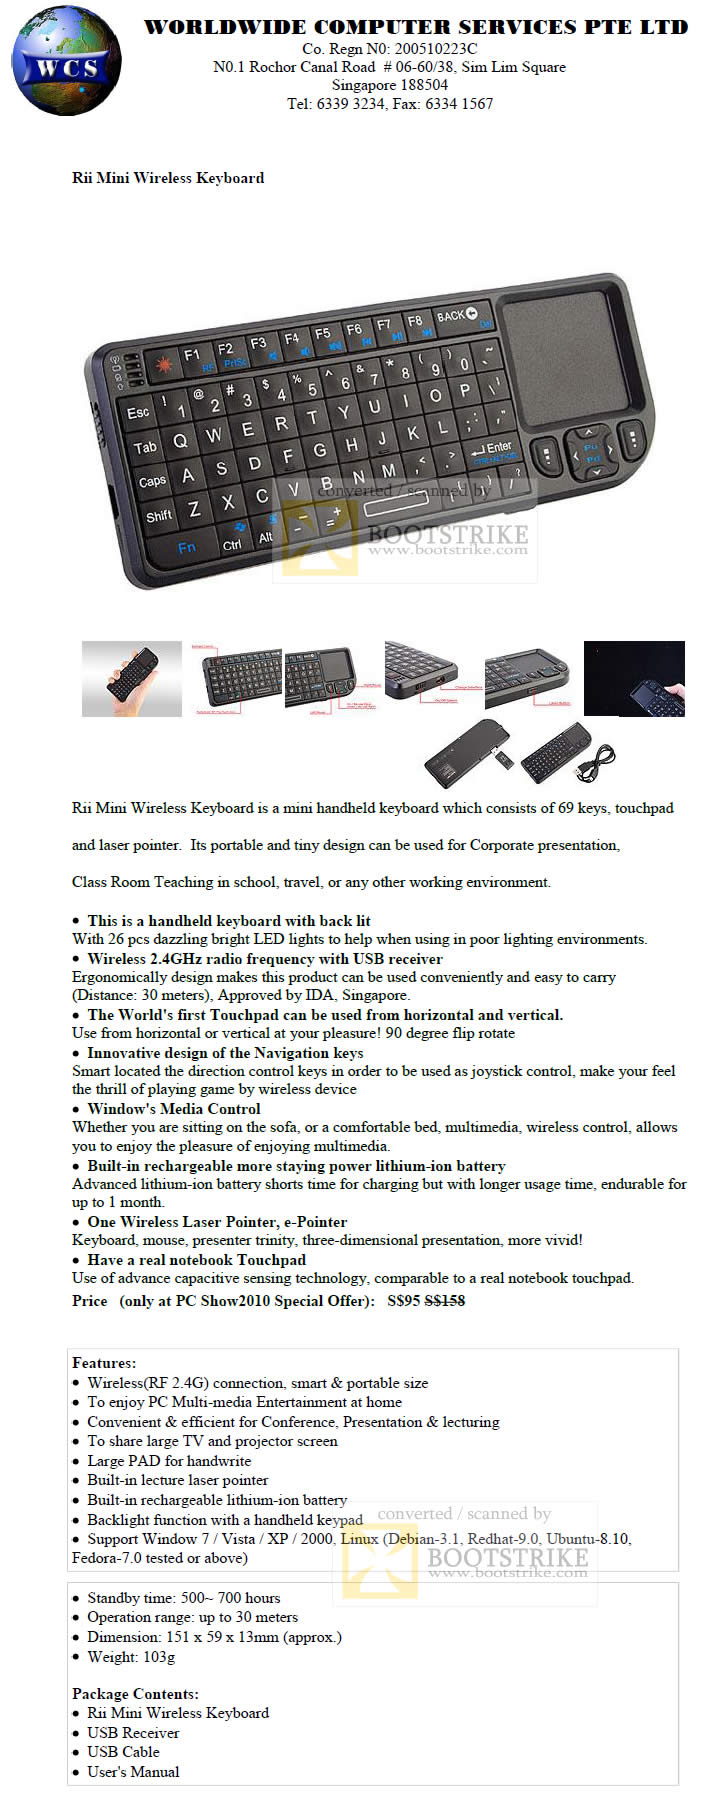 PC Show 2010 price list image brochure of Worldwide Computer Rii Mini Wireless Keyboard